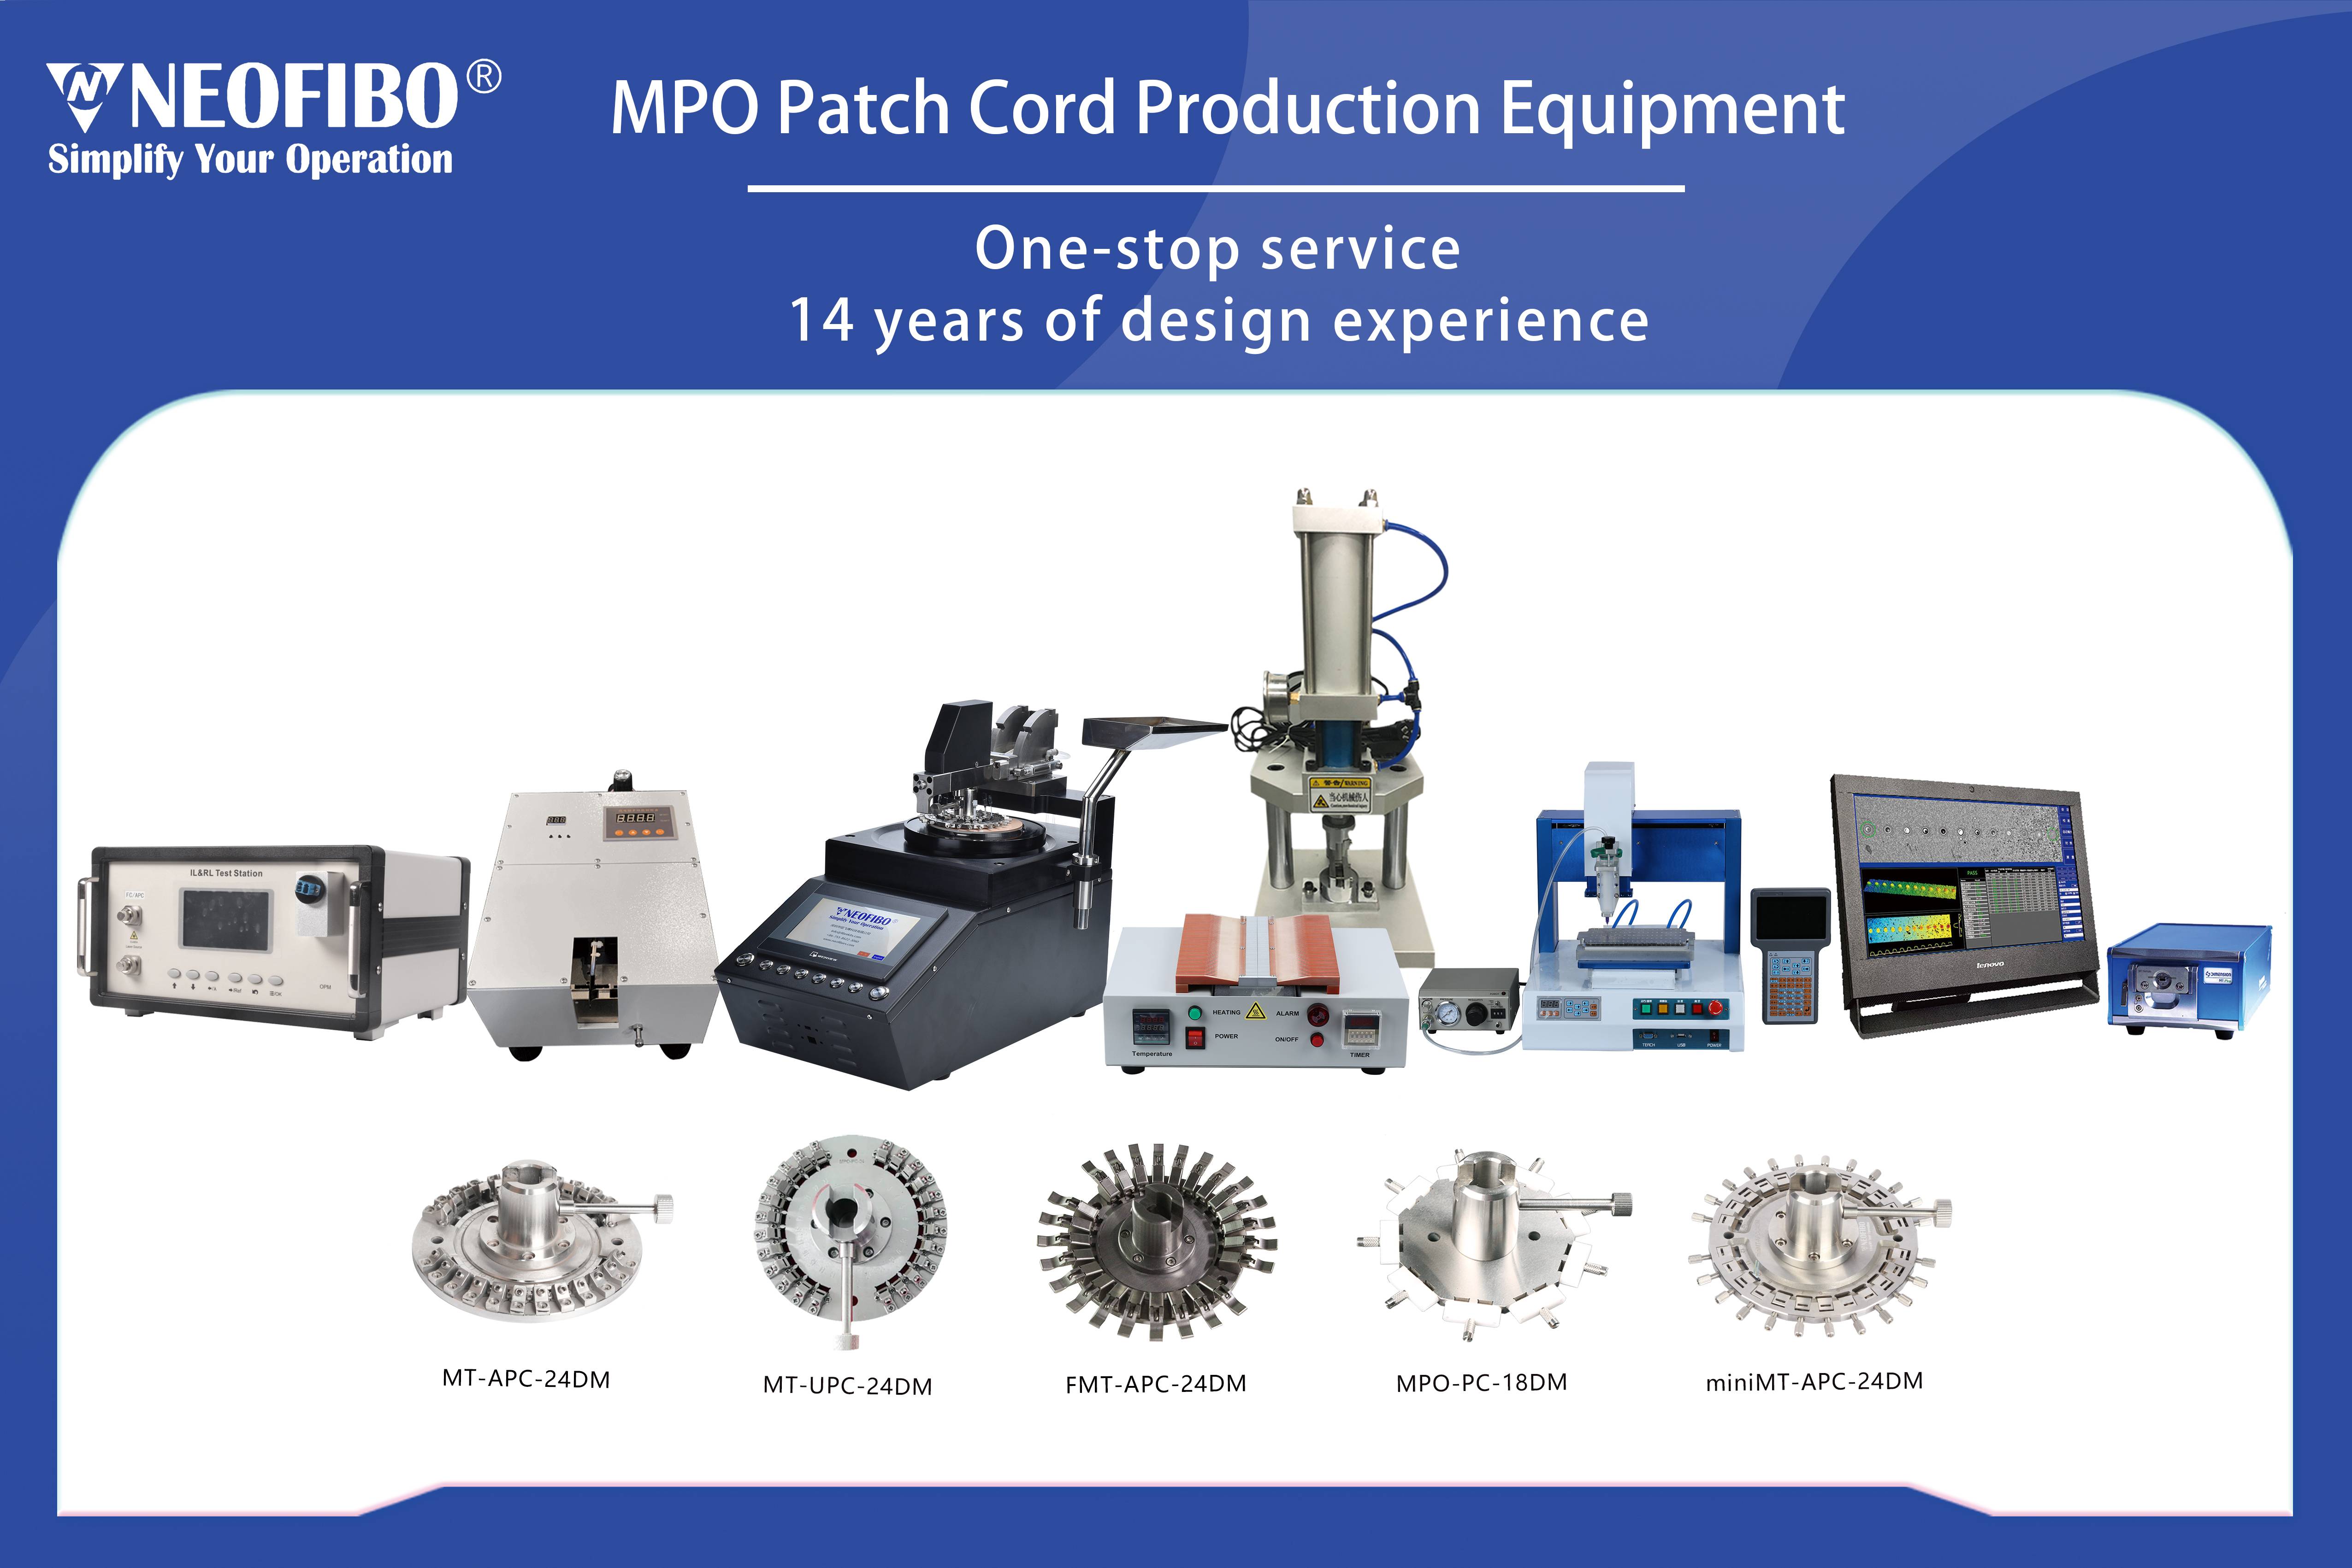 Neofibo MPO patch cord production equipment